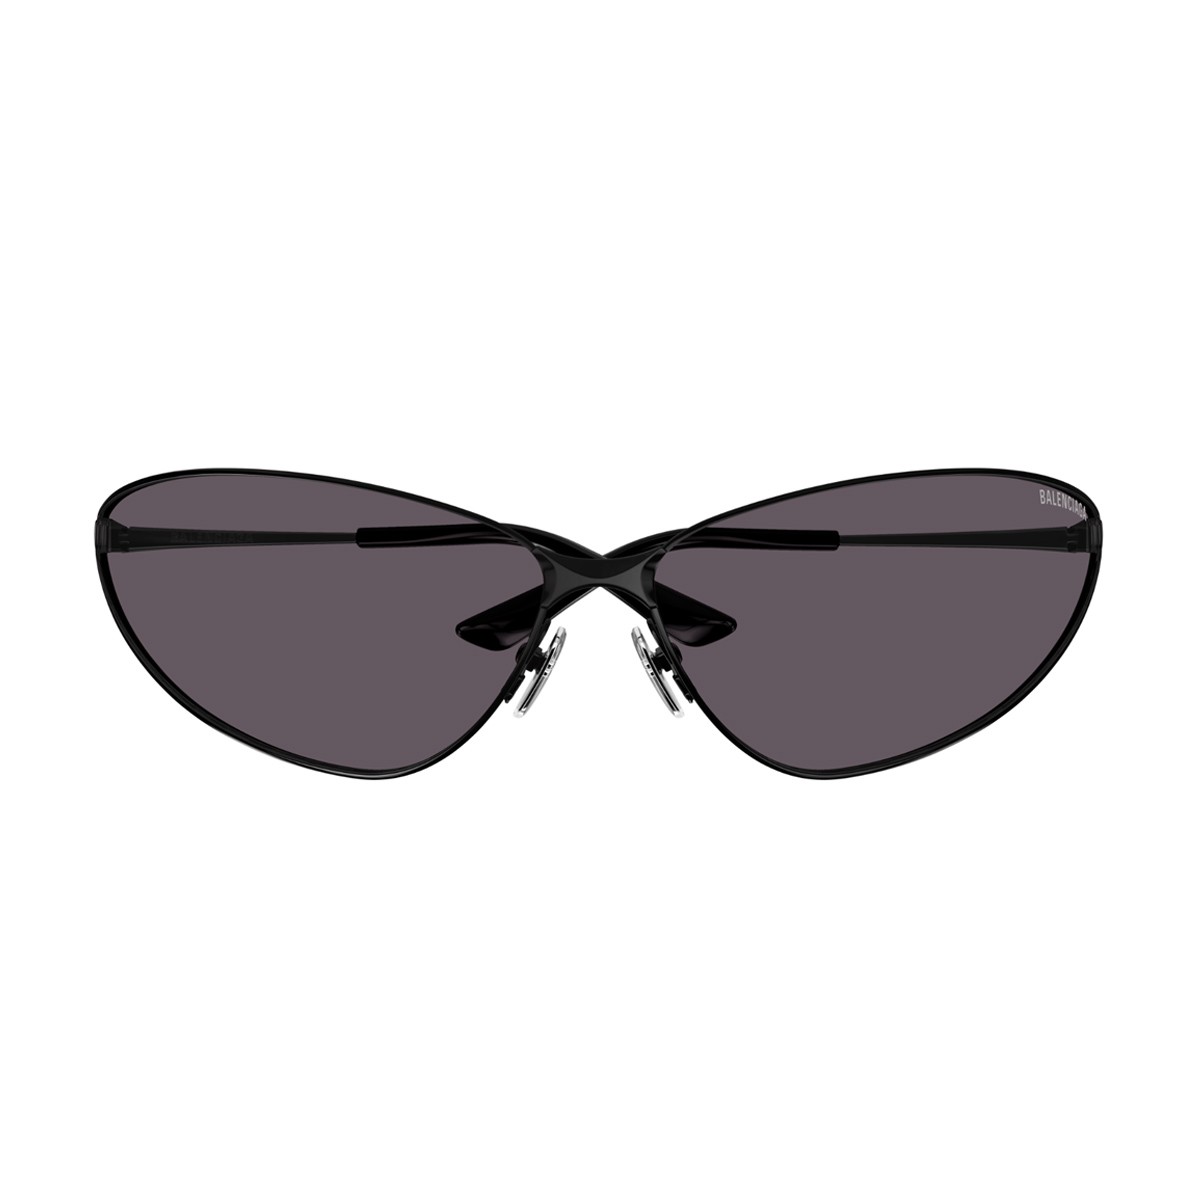 oakley razor blades 30th anniversary new best running sunglasses | eBay